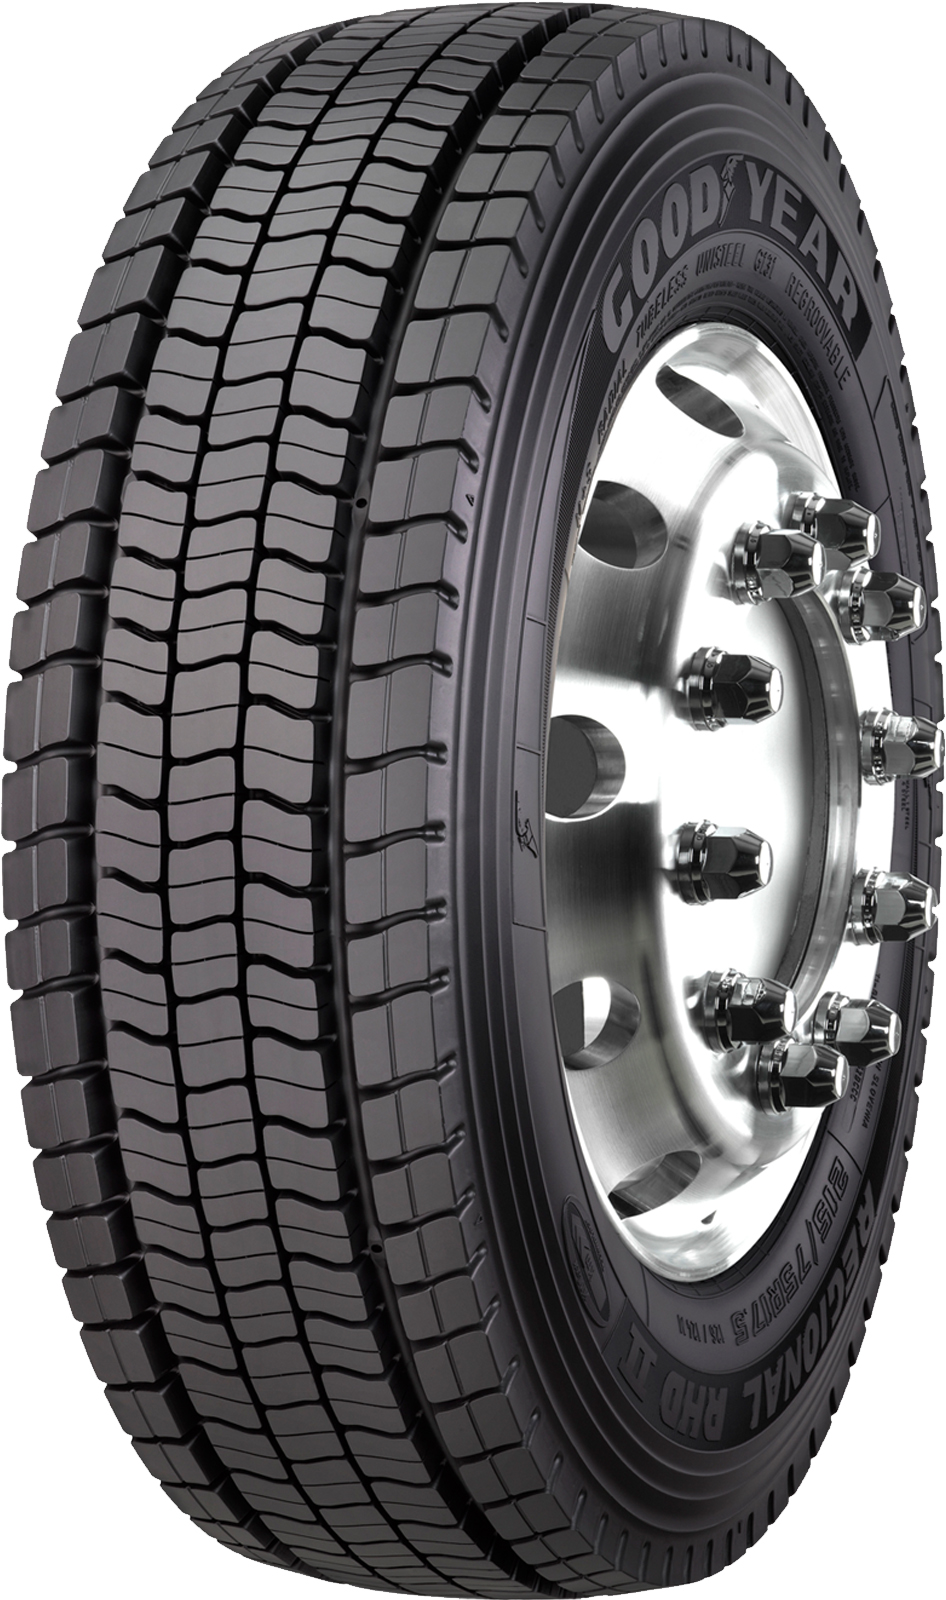 product_type-heavy_tires GOODYEAR REG. RHD II 305/70 R22.5 153L